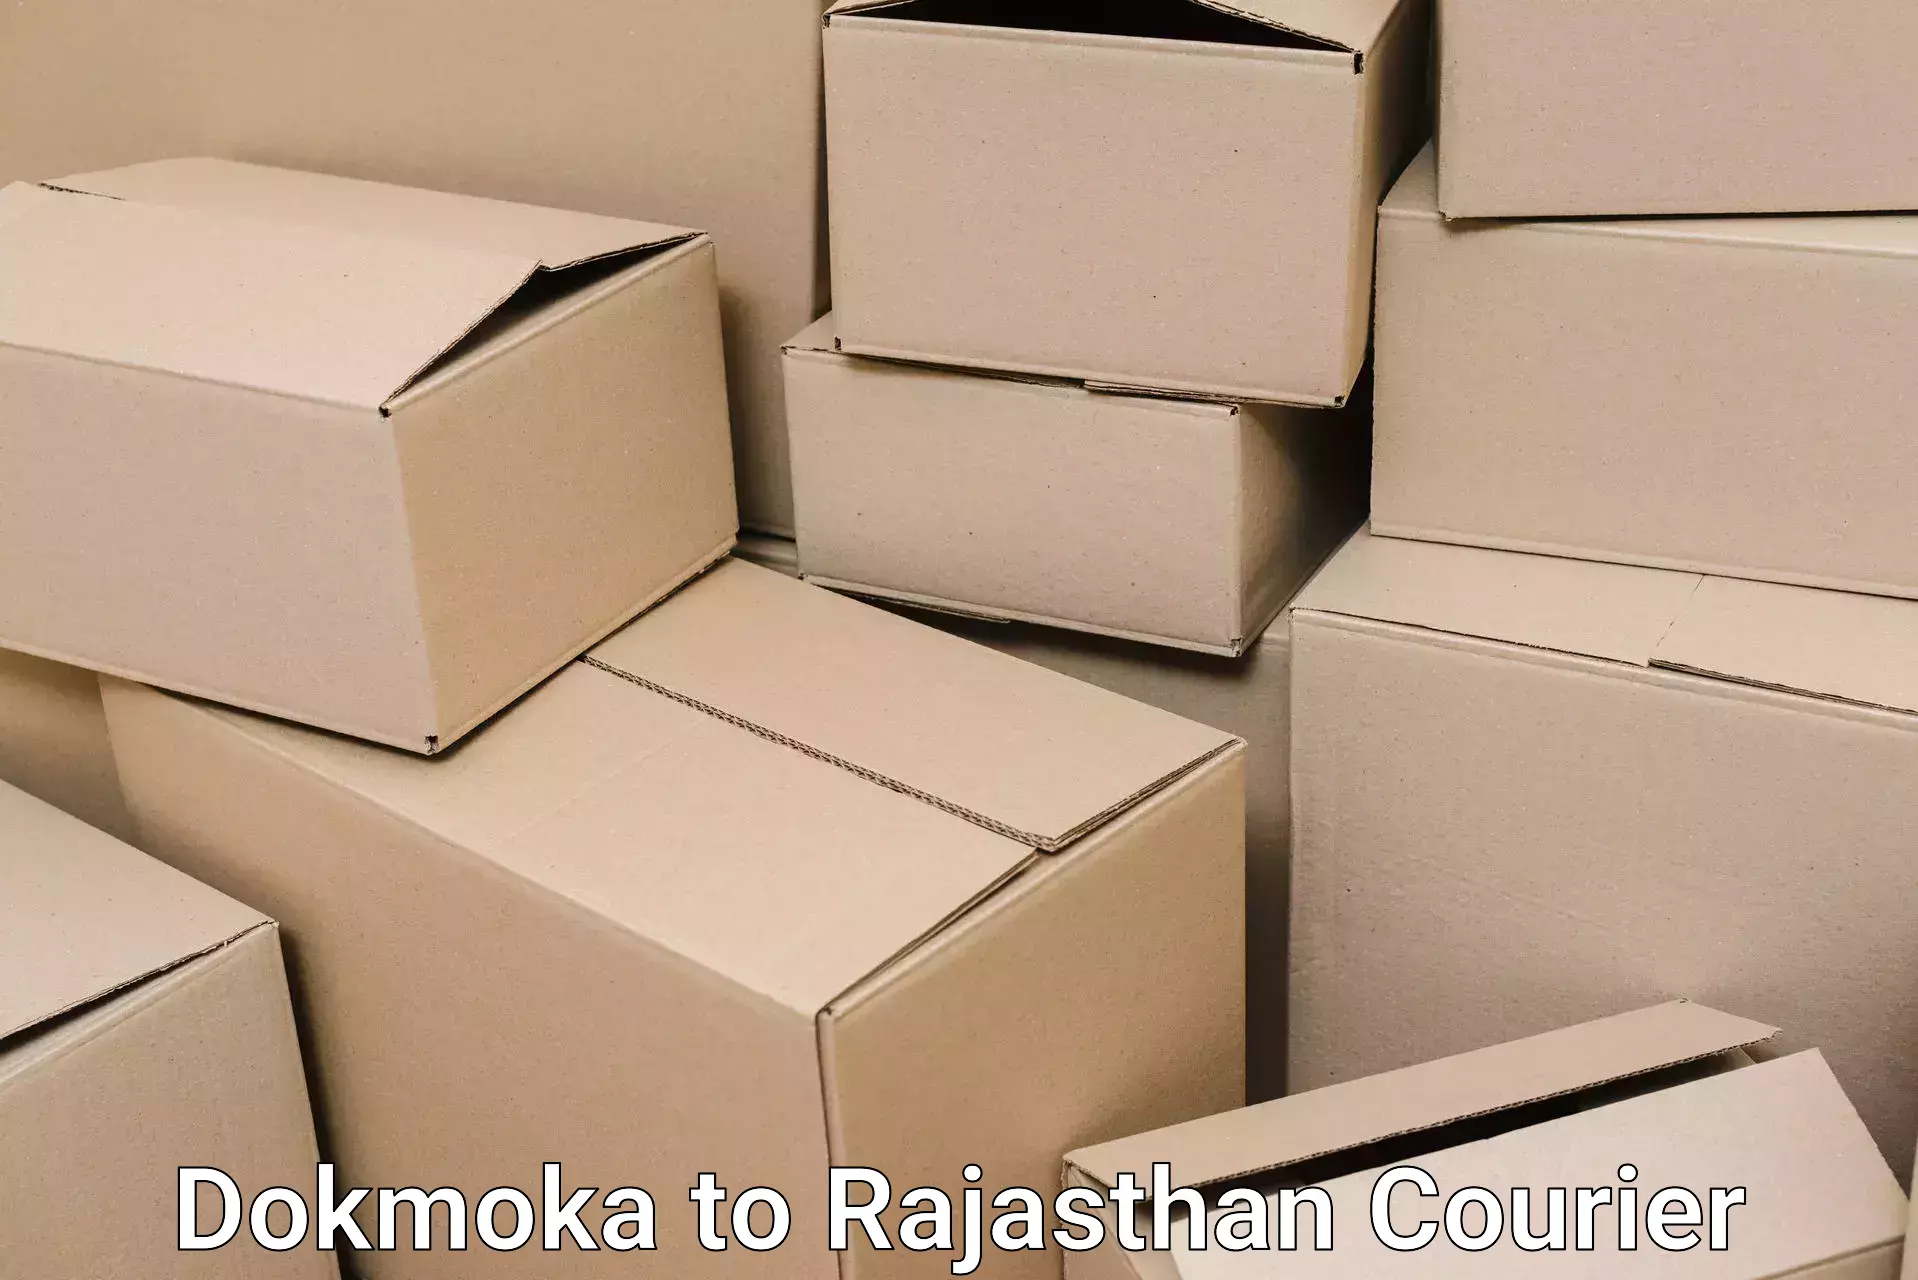 Efficient moving company in Dokmoka to Jaipur